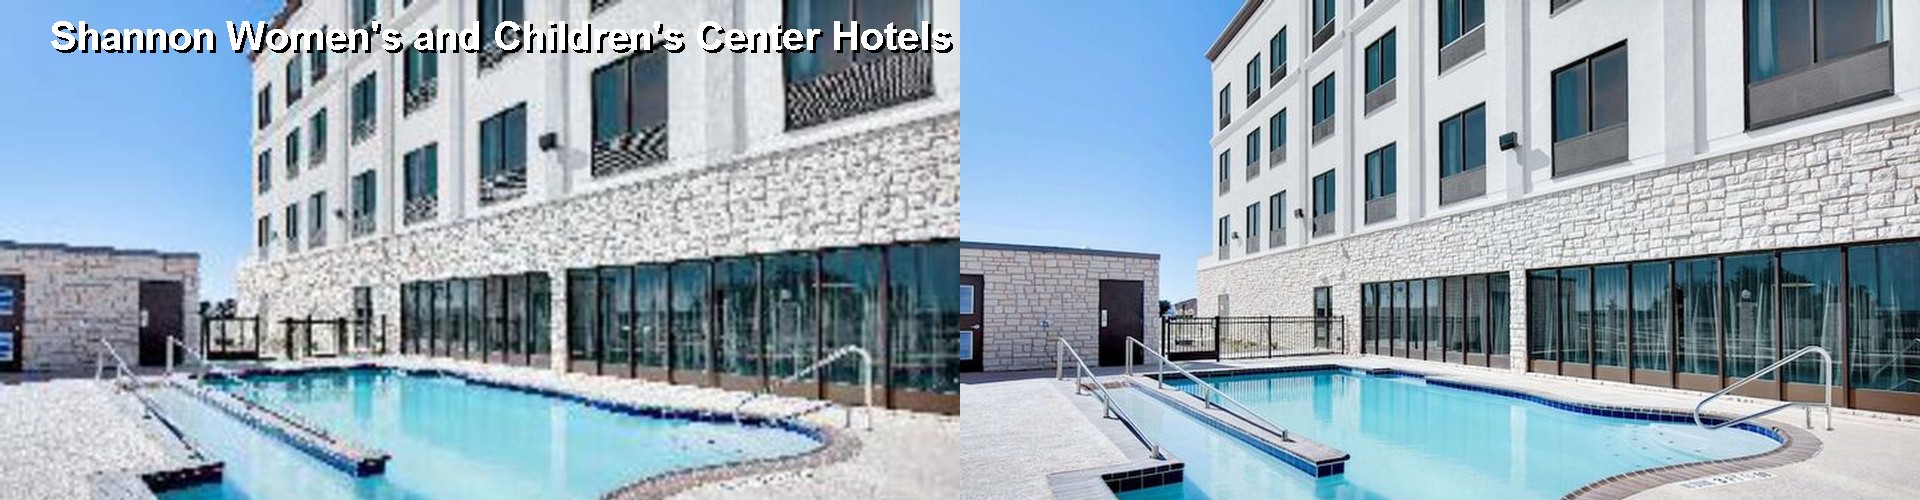 2 Best Hotels near Shannon Women's and Children's Center